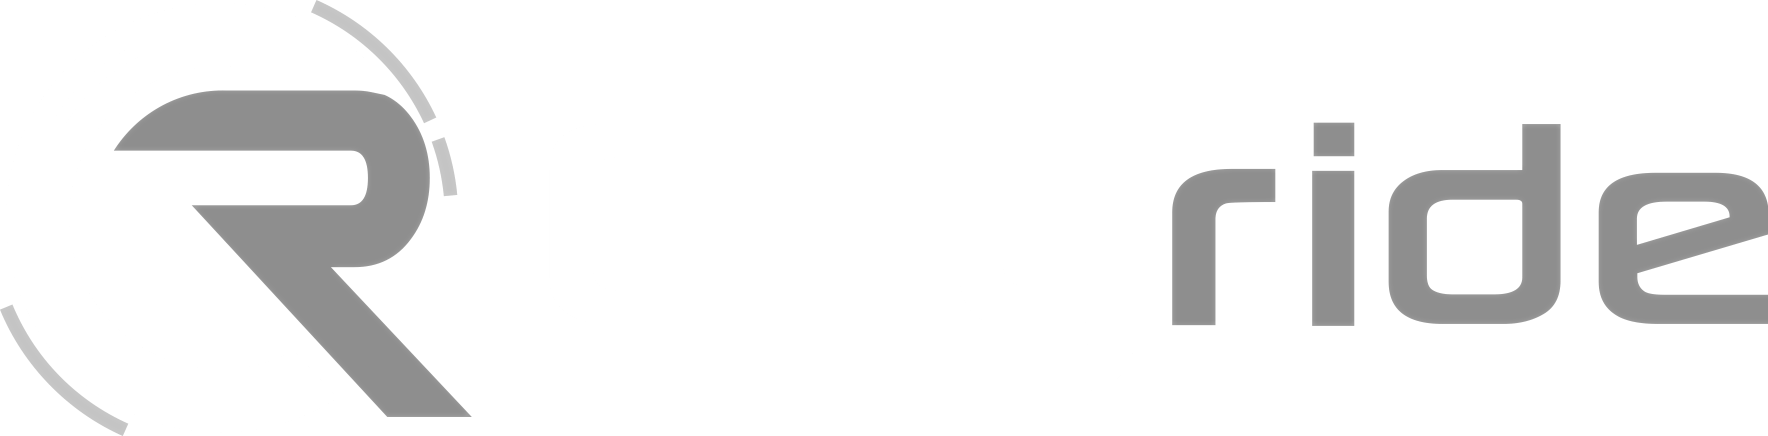 CityRide-bw